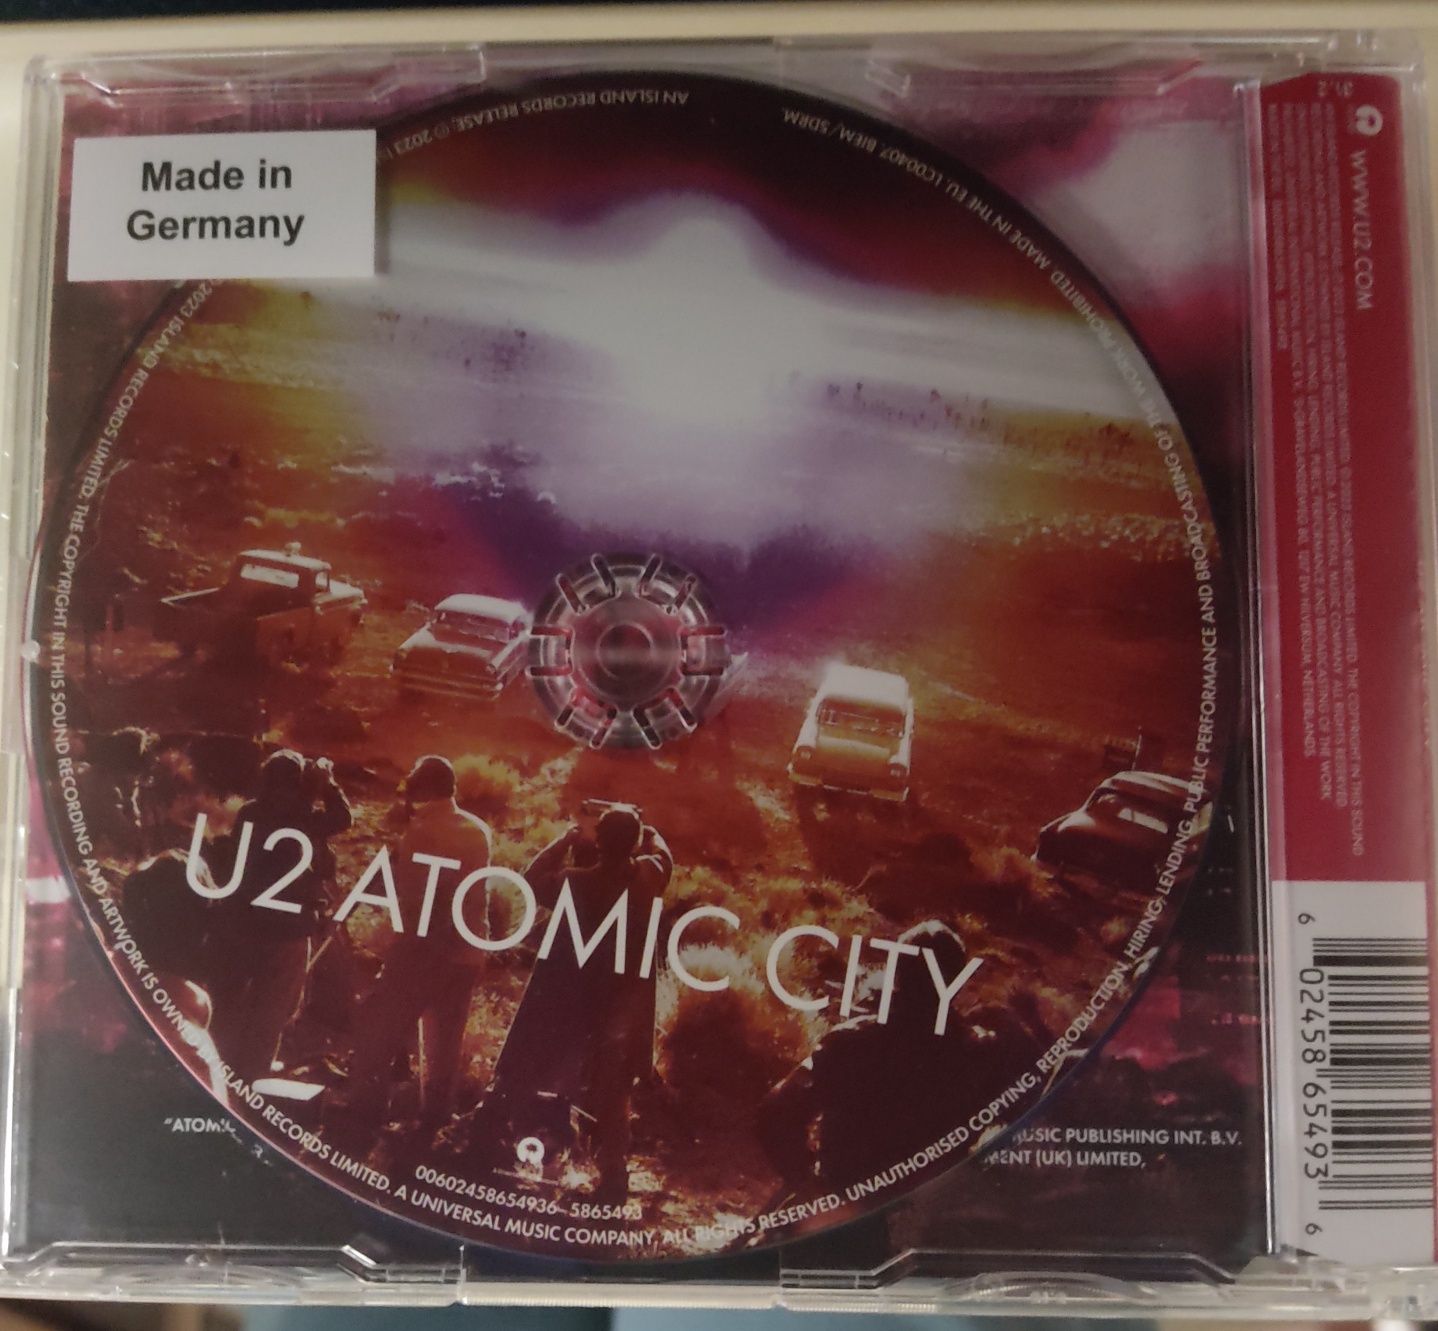 U2 CD single "Atomic City"